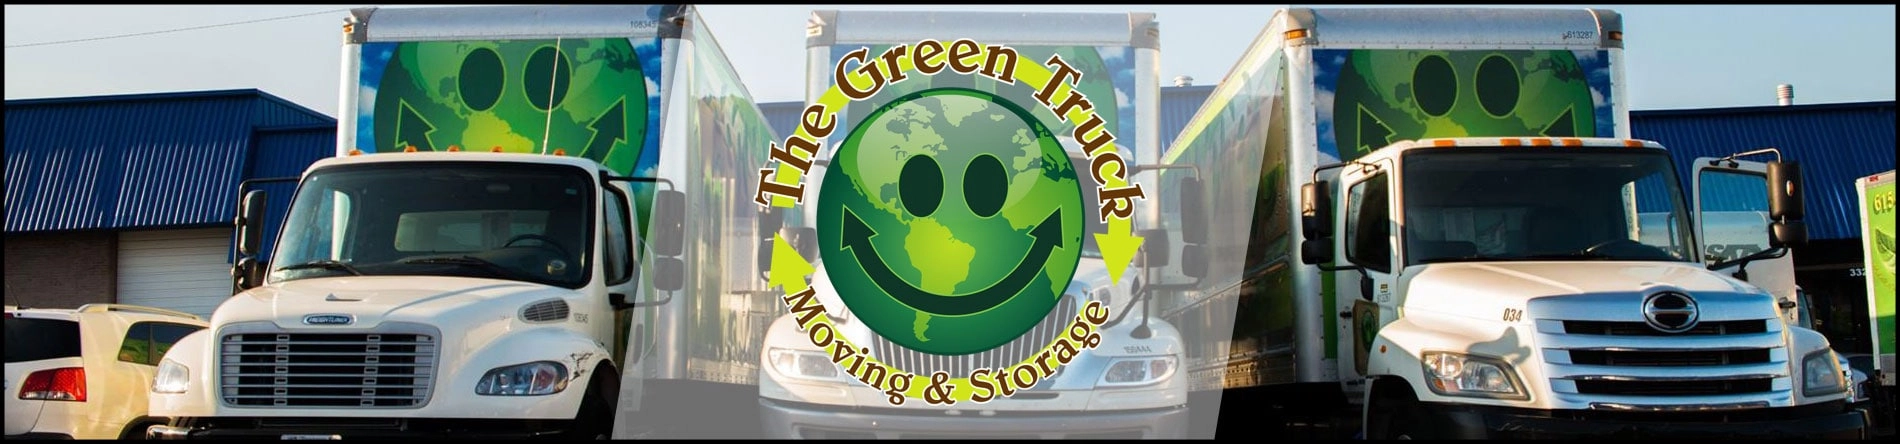 The Green Truck Moving & Storage - Nashville Logo